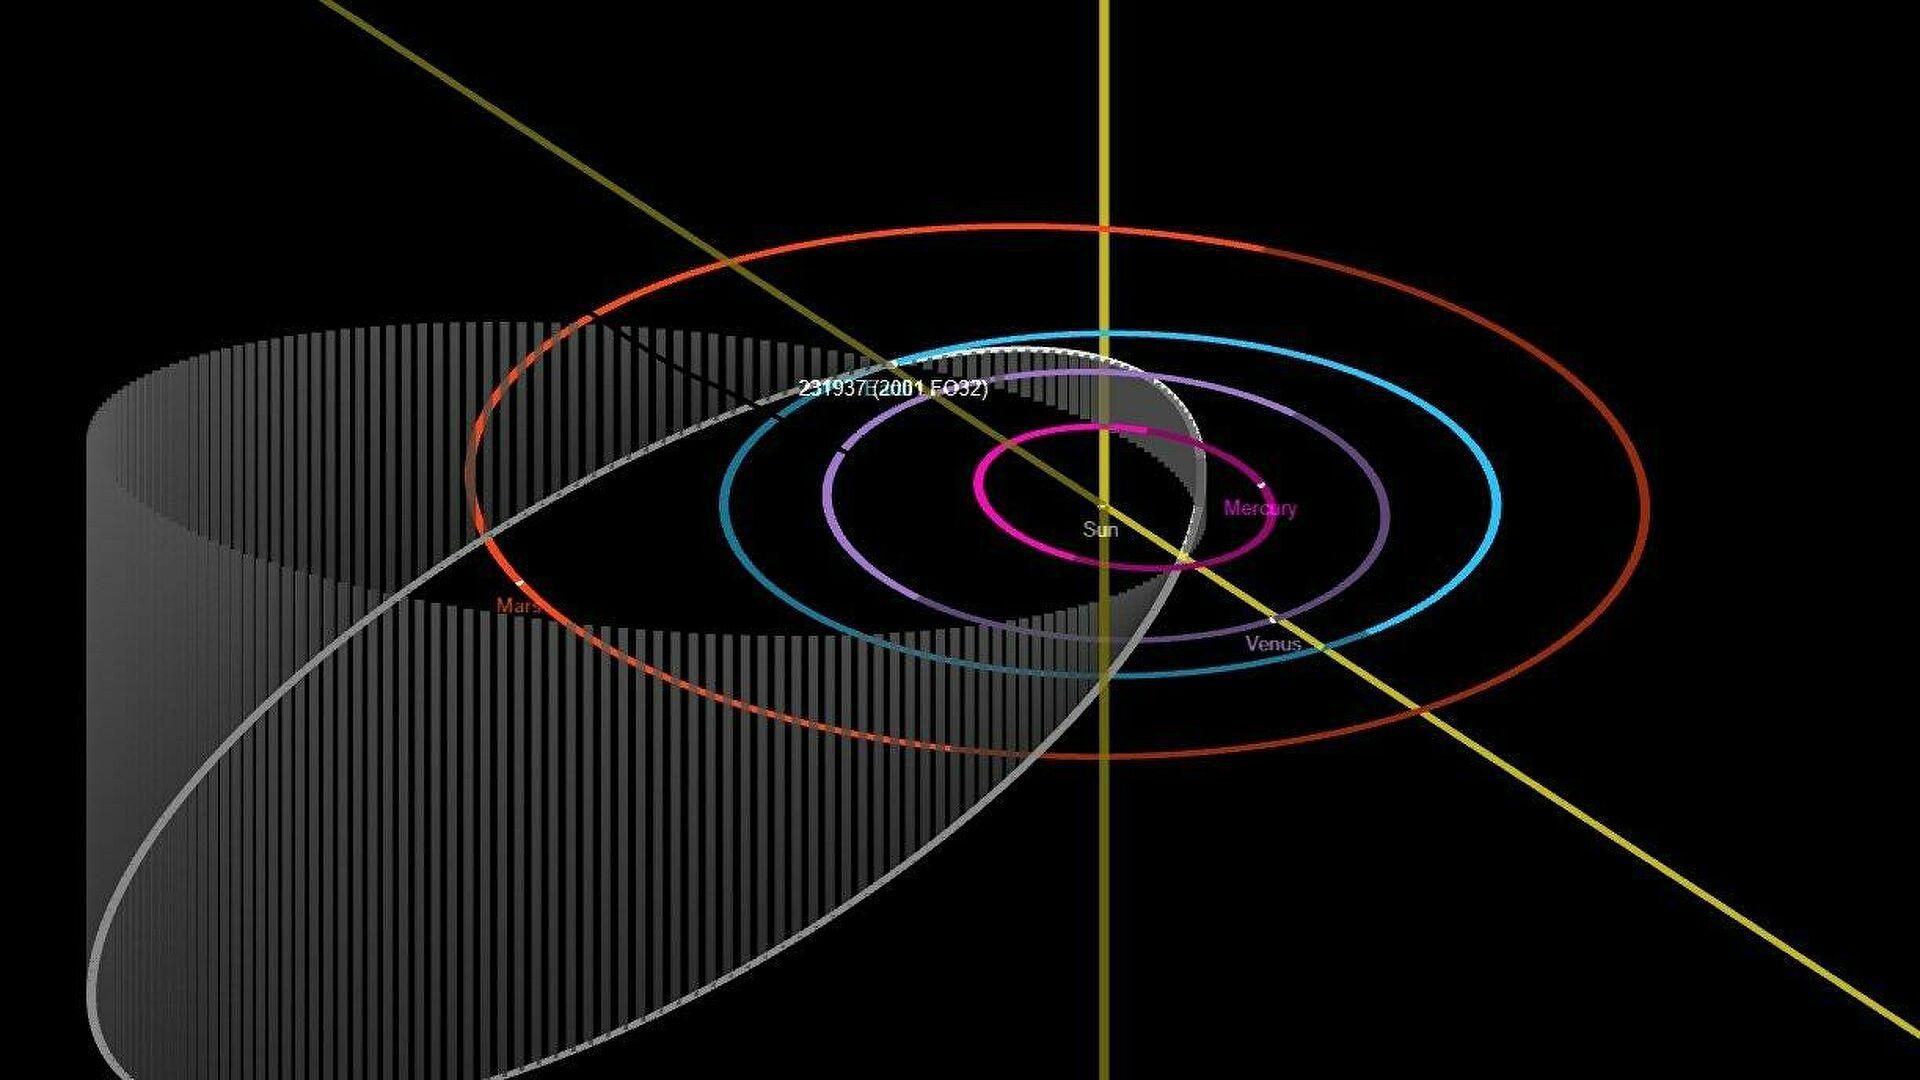 © NASA/JPL-Caltech Эллиптическая орбита астероида 2001 FO32 показана белым